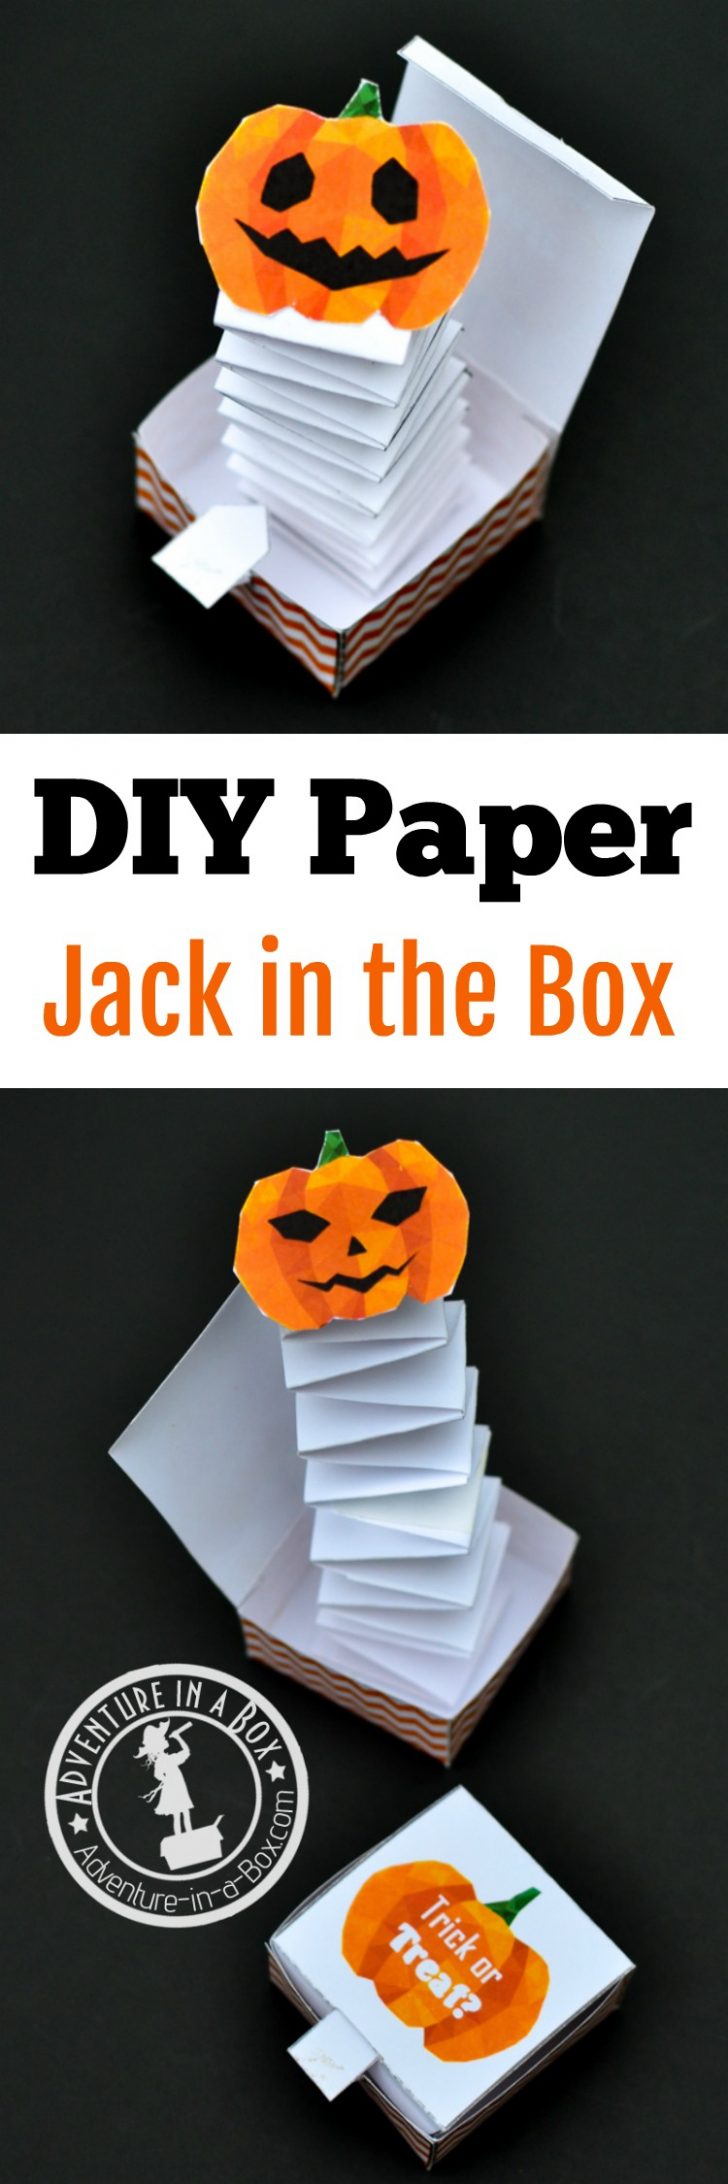 Free Printable Halloween Paper Crafts